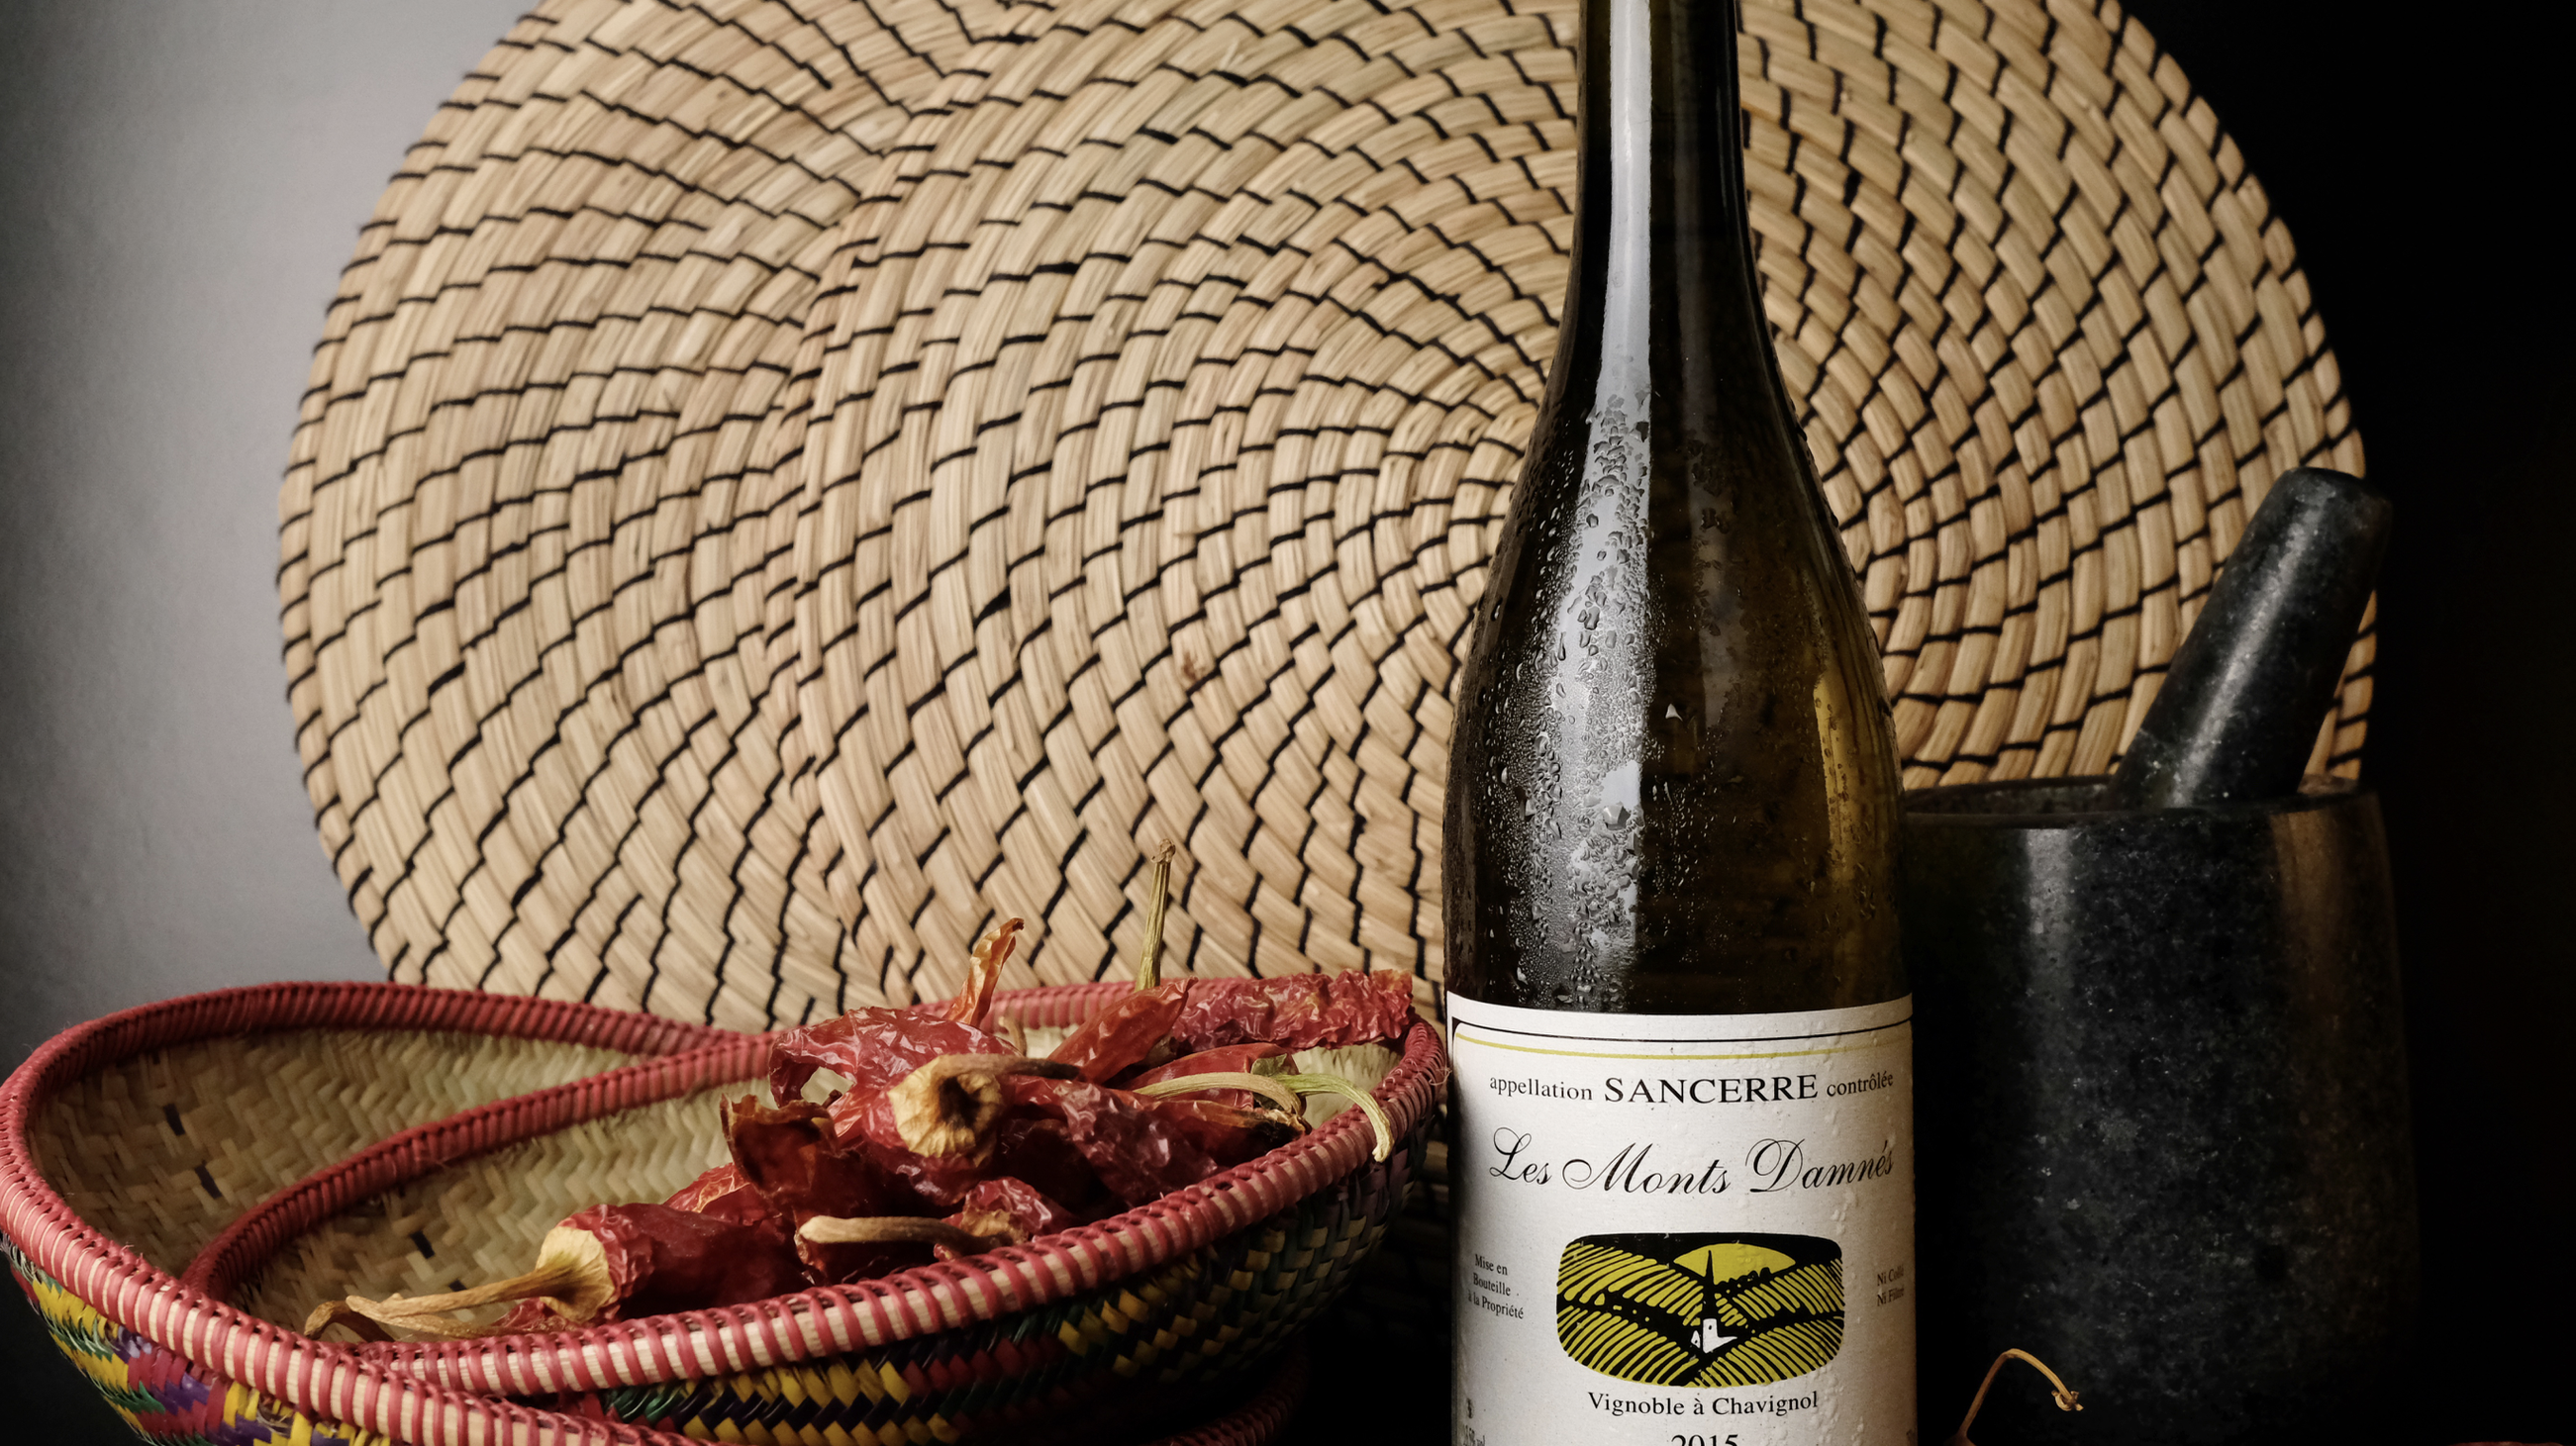 Sancerre Chavignol Sauvignon Blanc wine on pentictonpacific.com